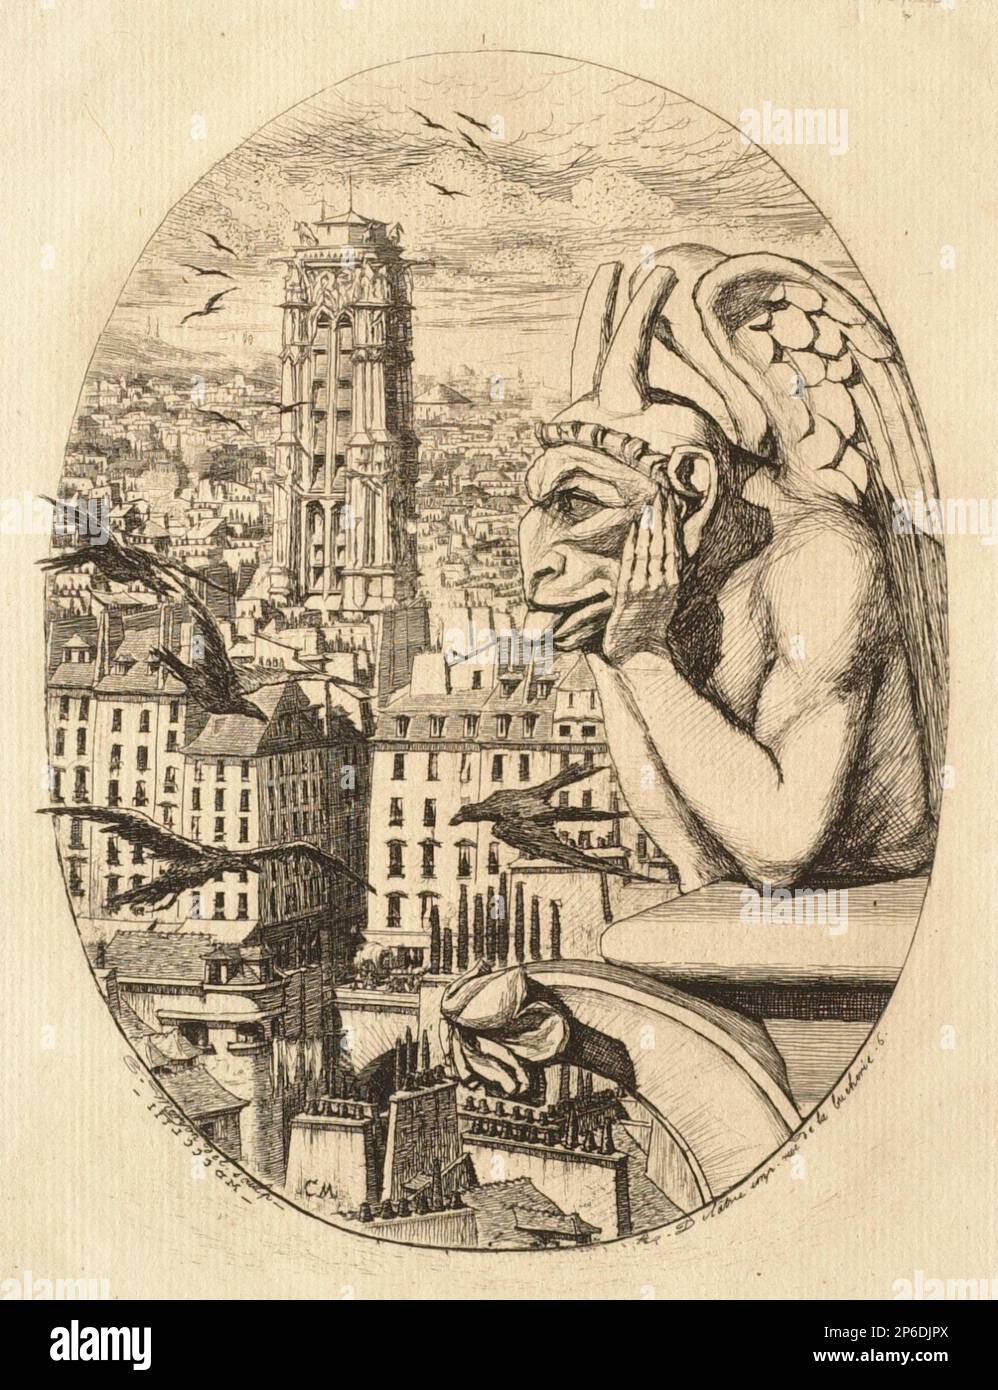 Charles Meryon, Le Stryge, 1853, auf Papier geätzt. Stockfoto